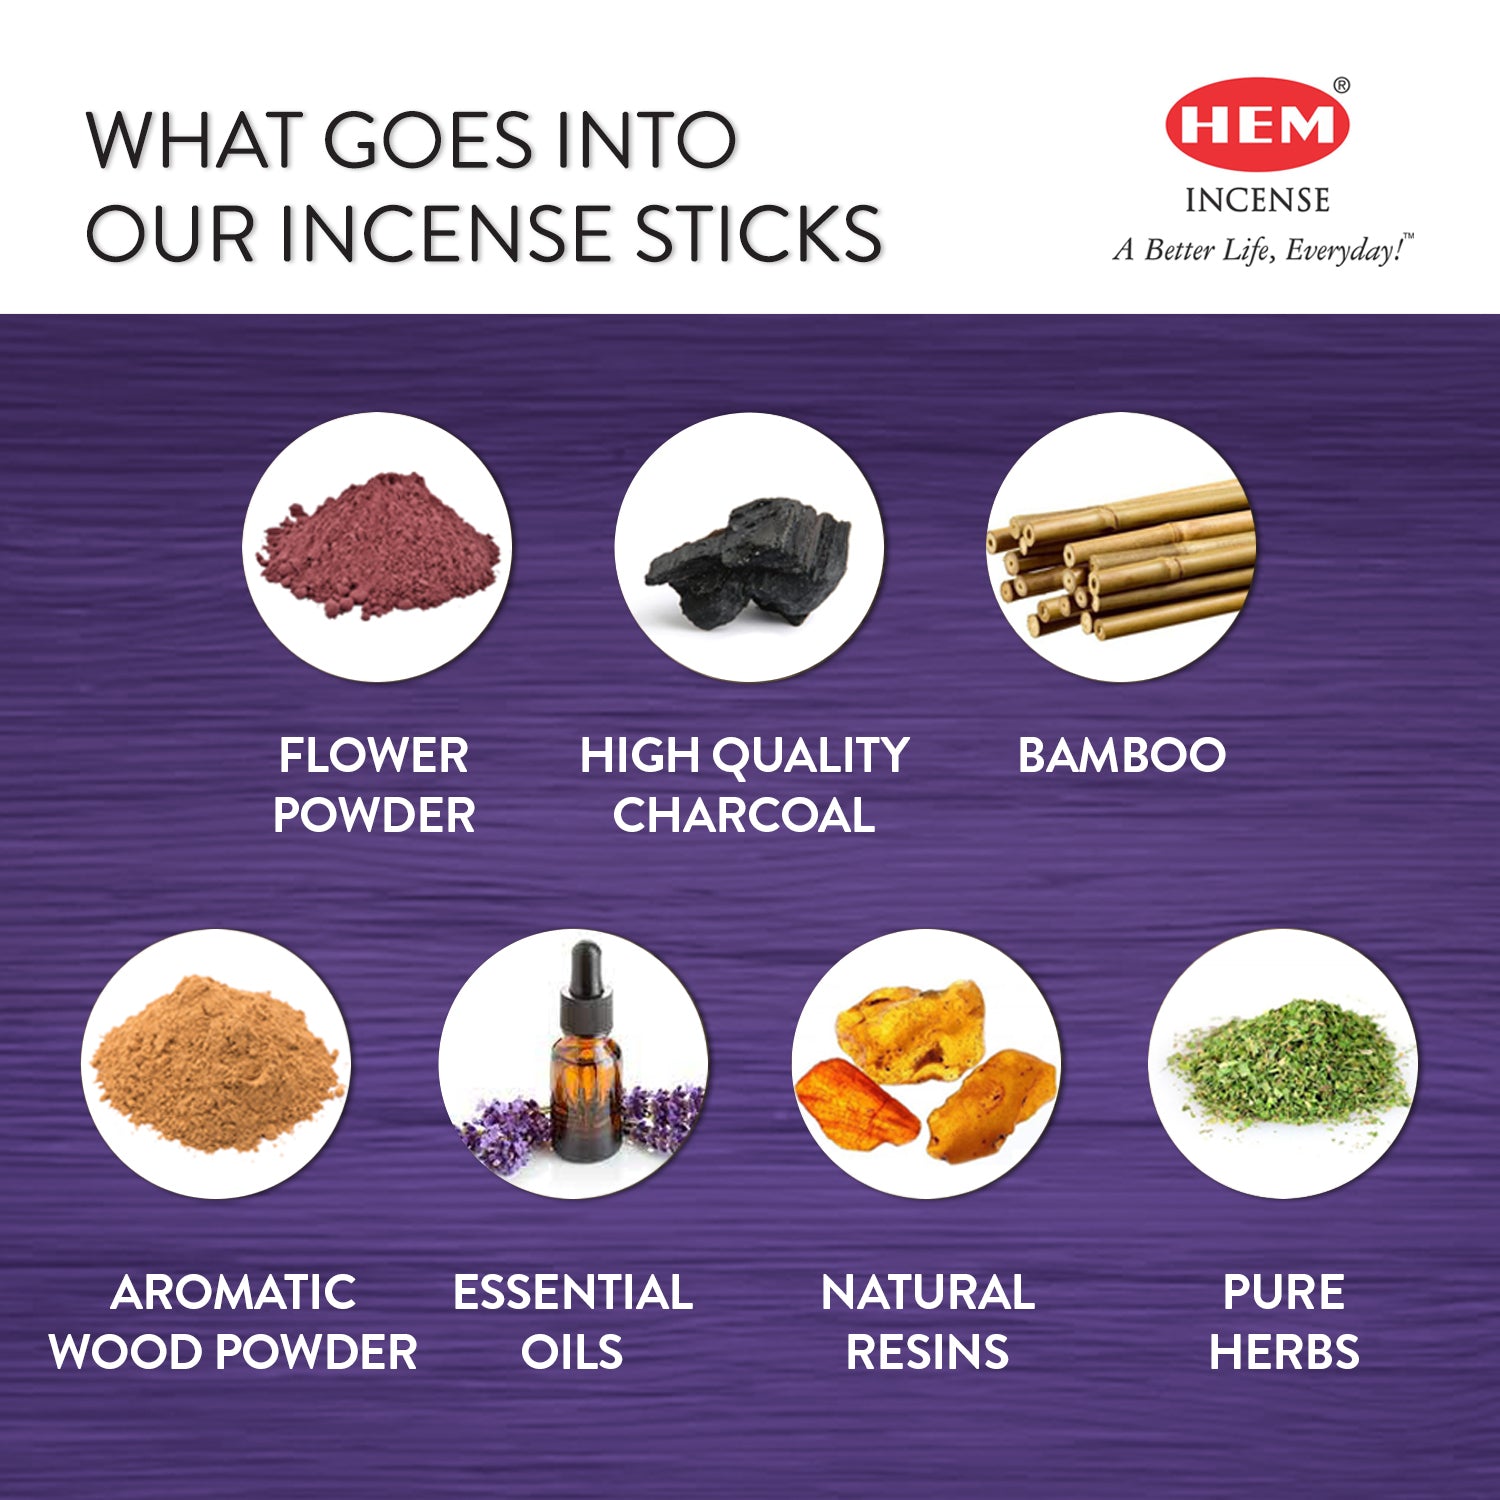 hem-precious-lavender-incense-sticks-ingredients